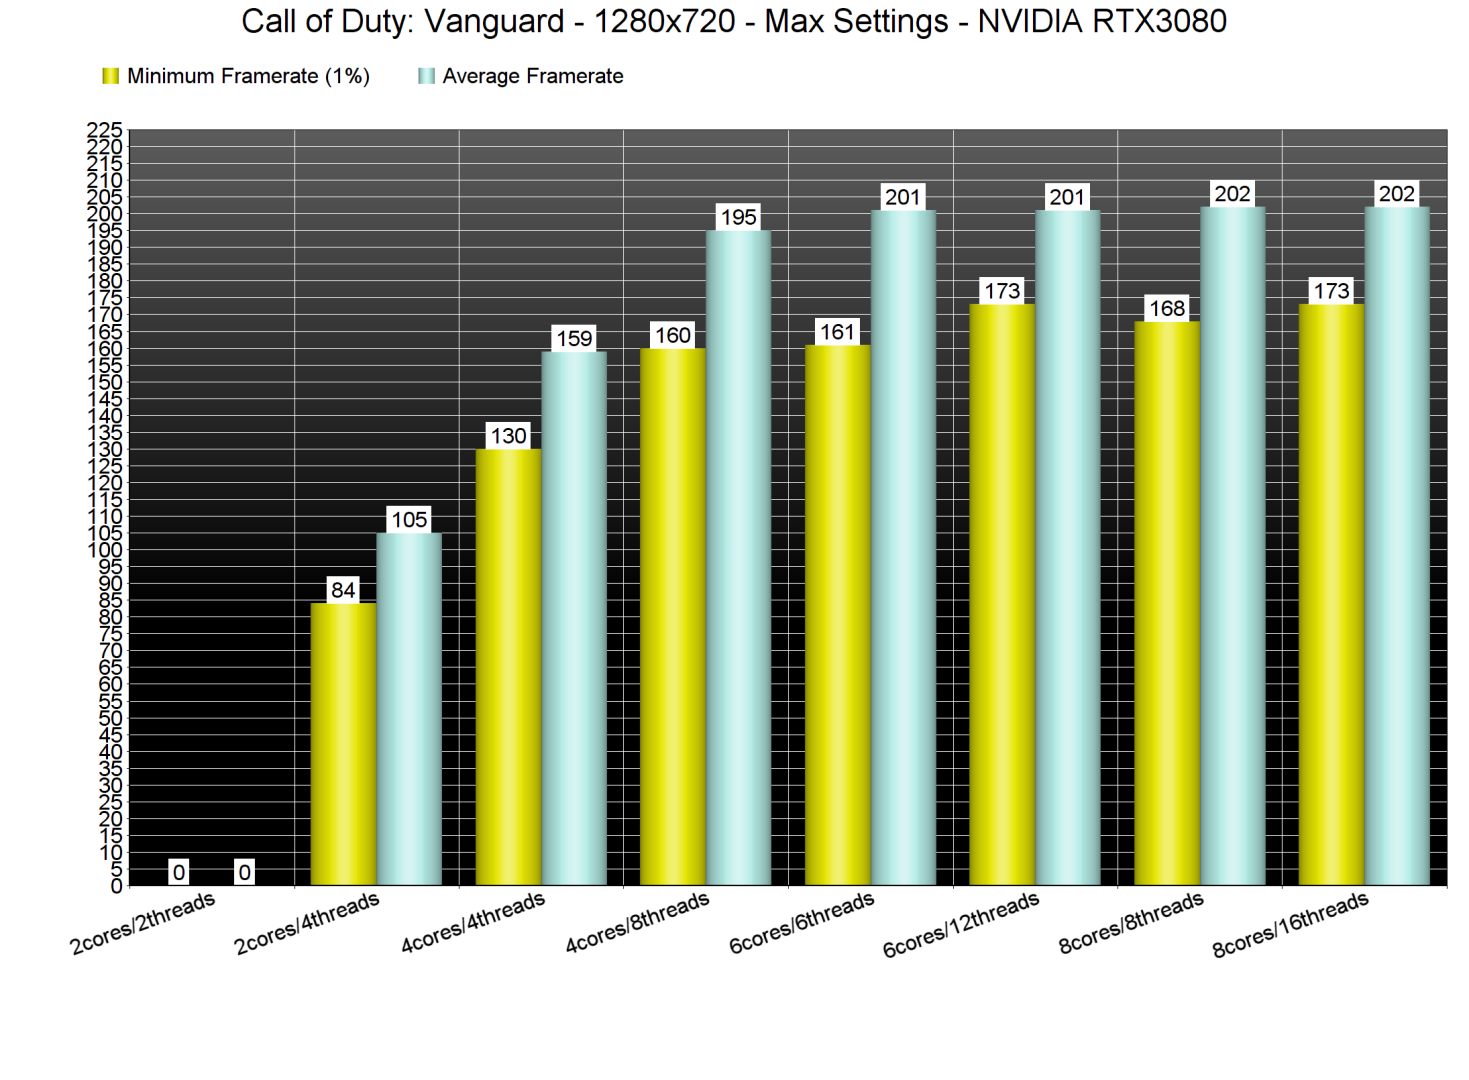 Call of Duty Vanguard CPU benchmarks